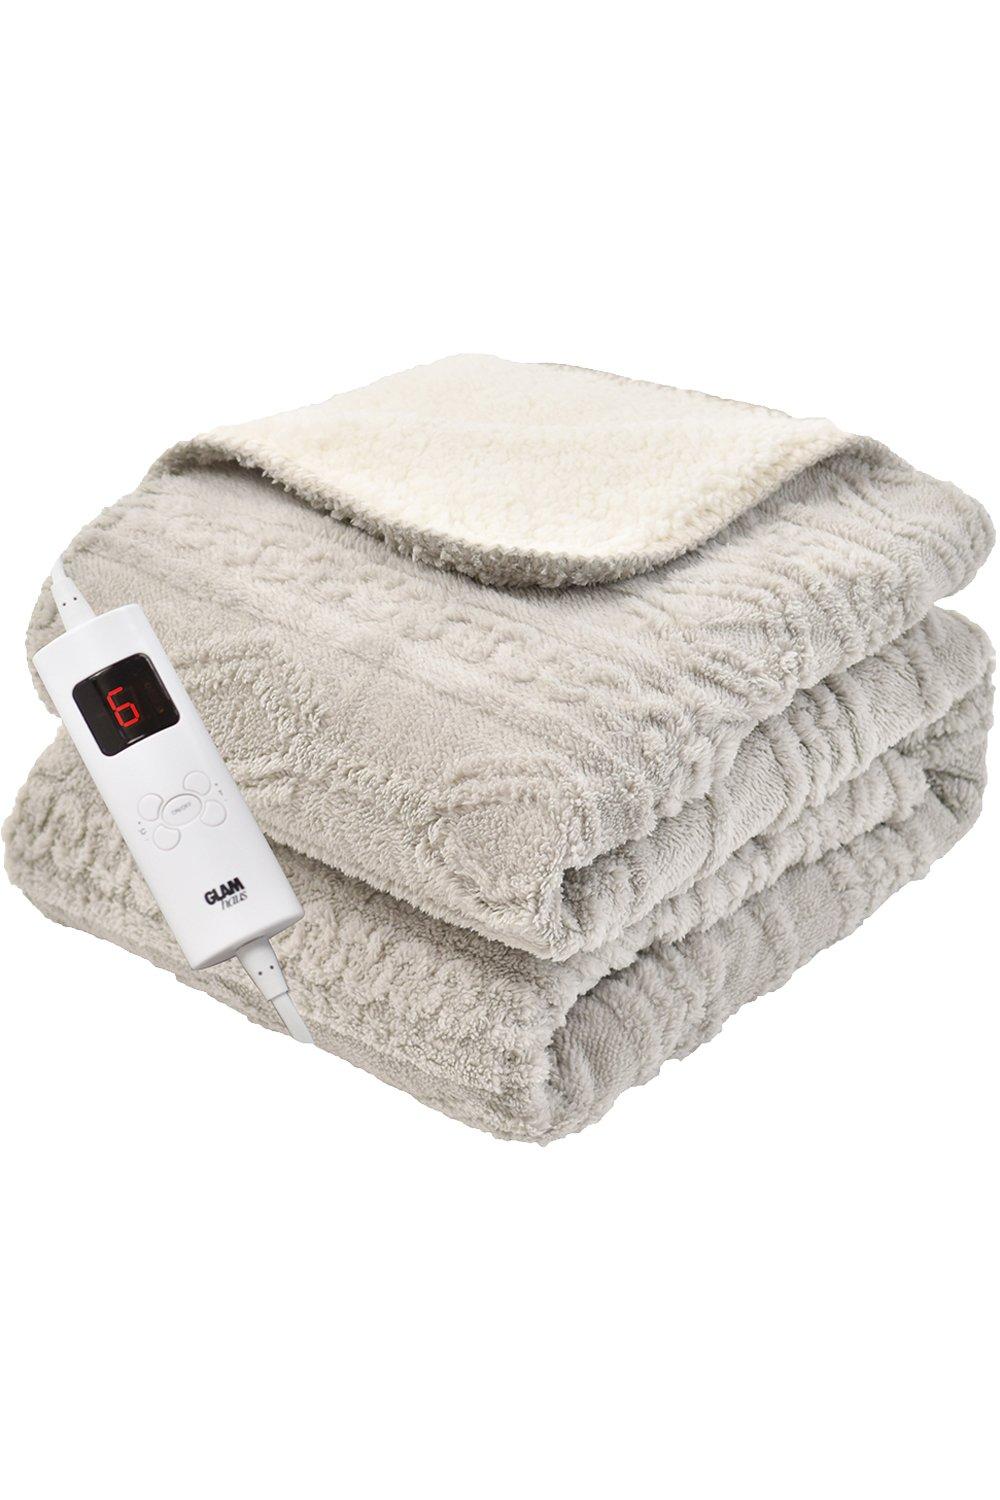 Electric Heated Throw Fleece Blanket 160 x 130cm